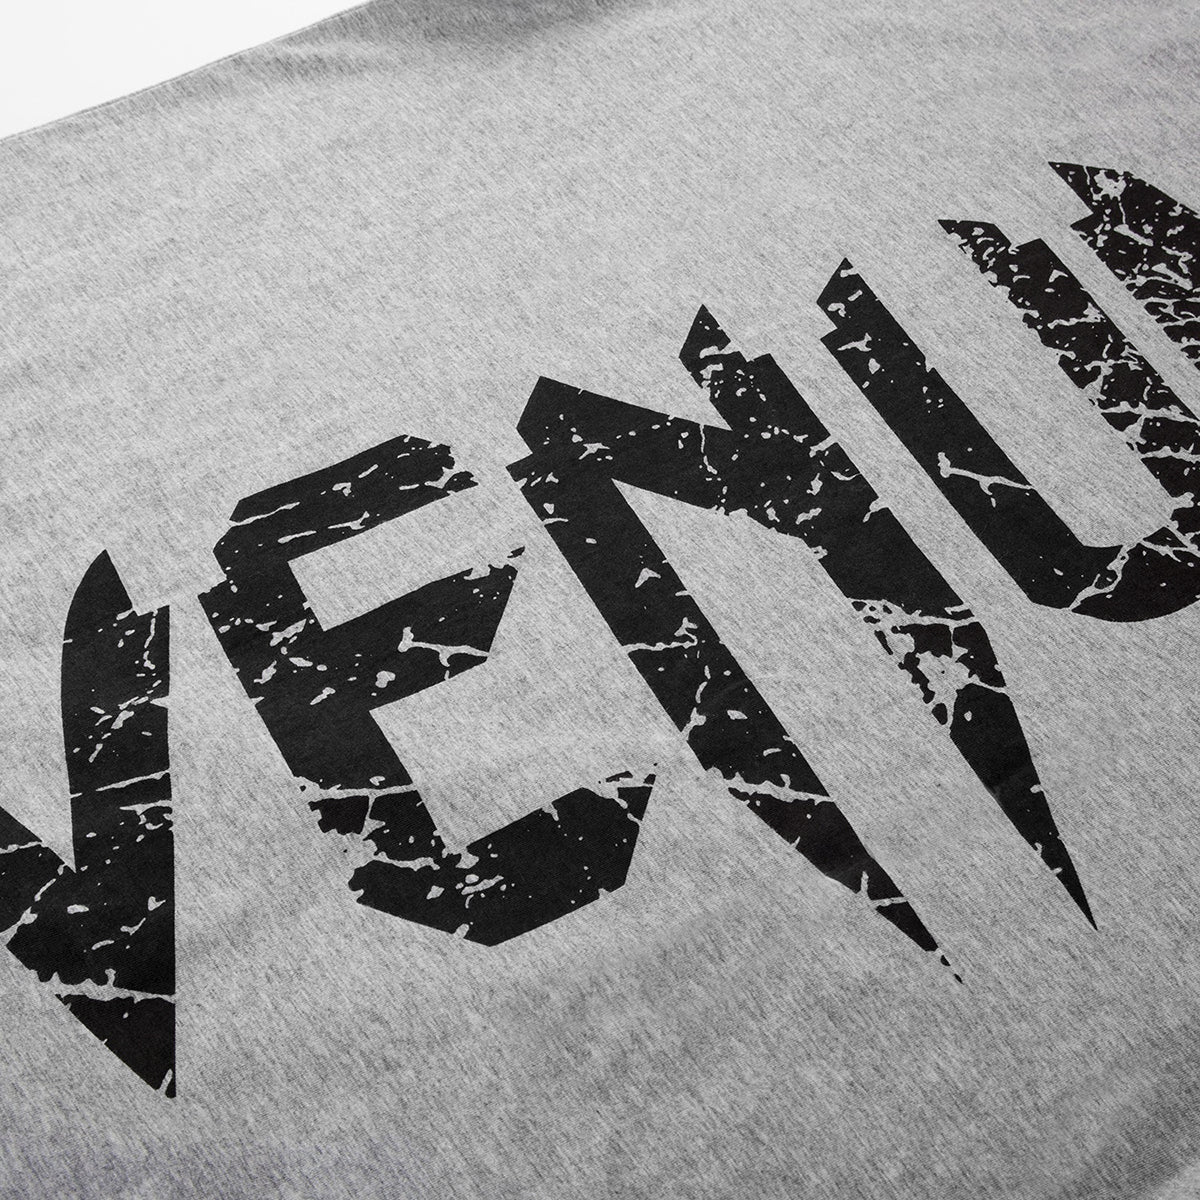 Venum Giant Short Sleeve T-Shirt - Gray/Black Venum